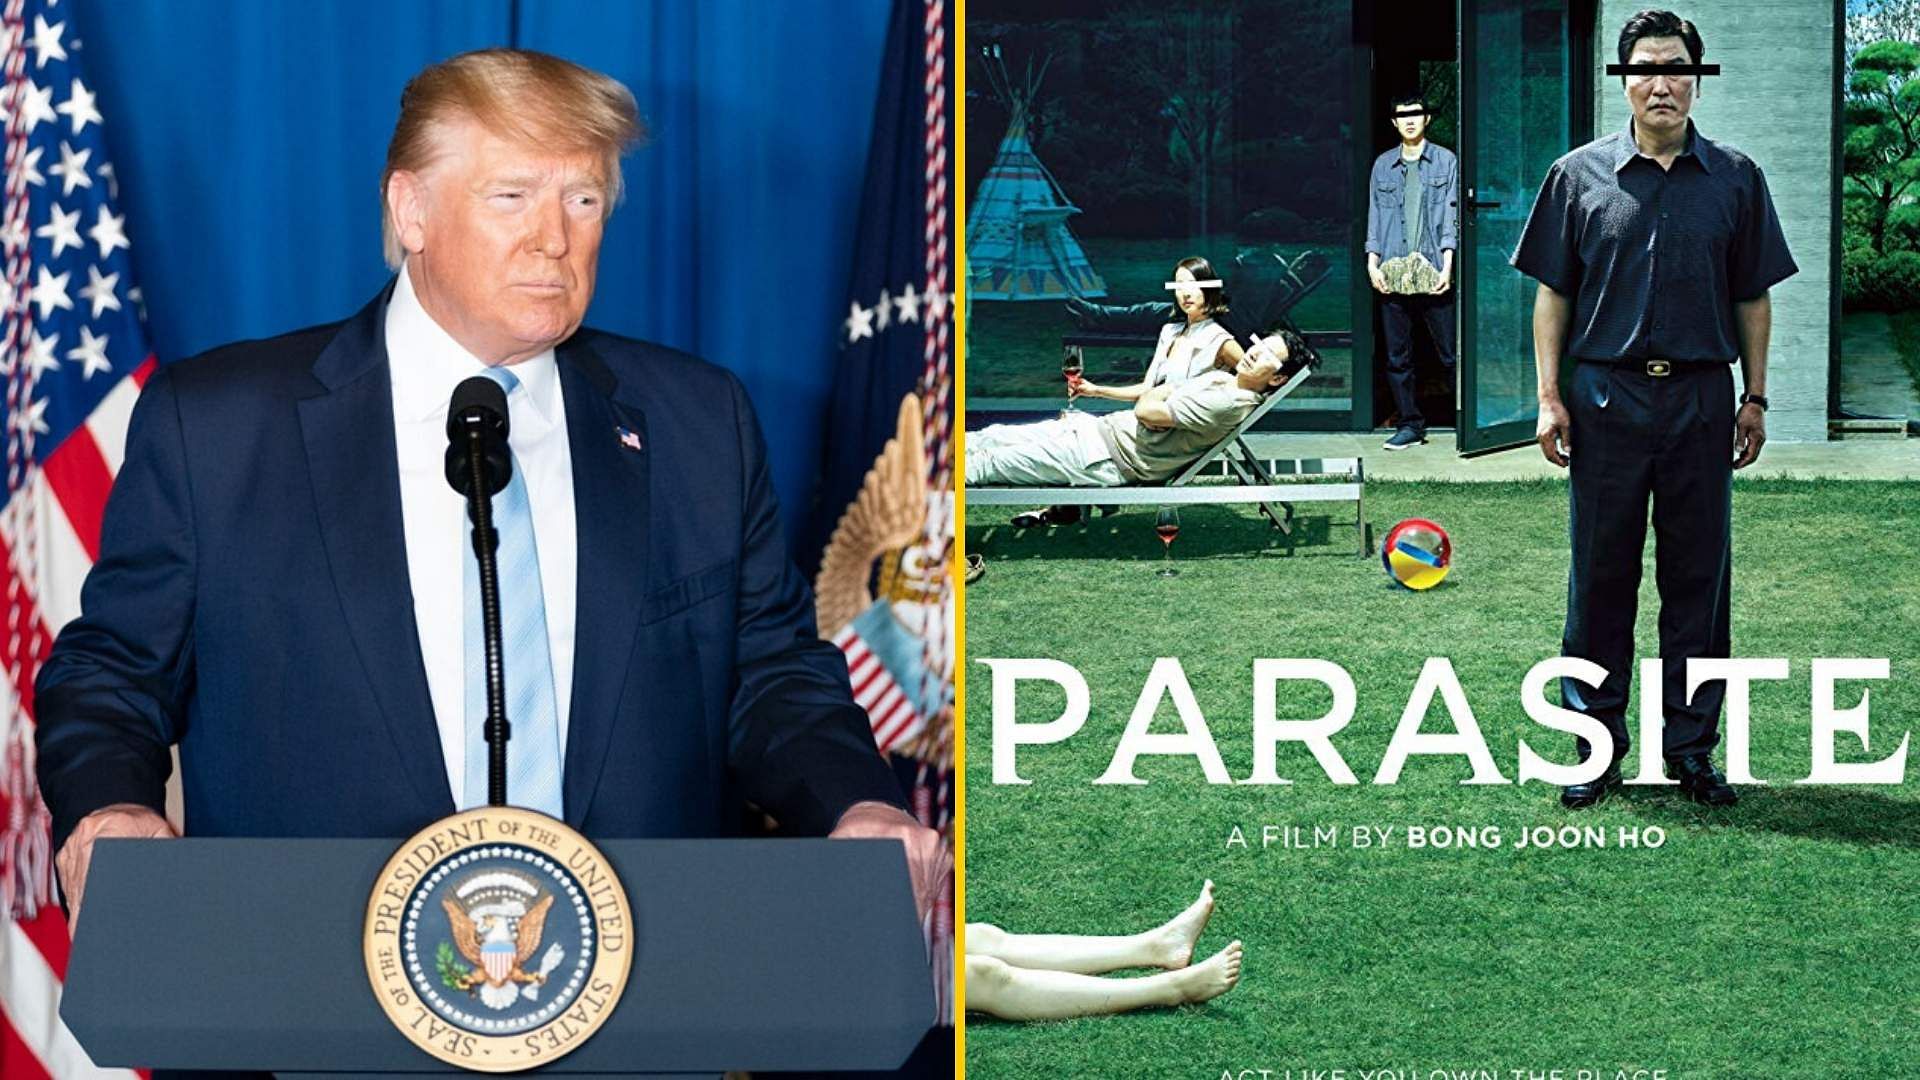 Donald Trump has criticised <i>Parasite</i>’s Oscar win.